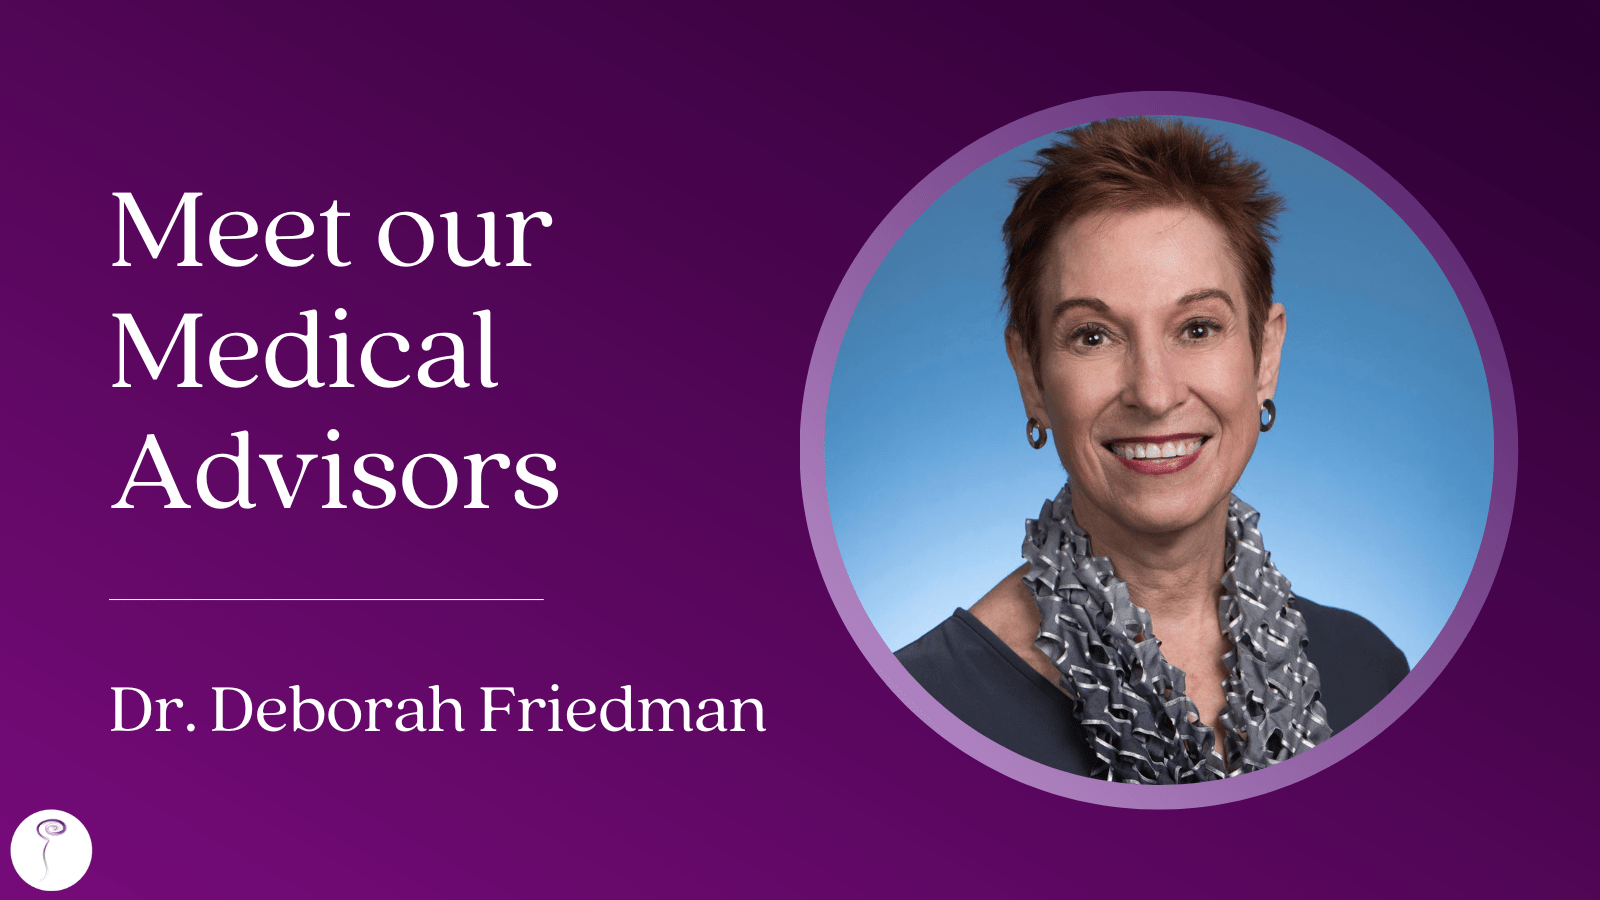 Meet our Medical Advisors: Dr. Deborah Friedman